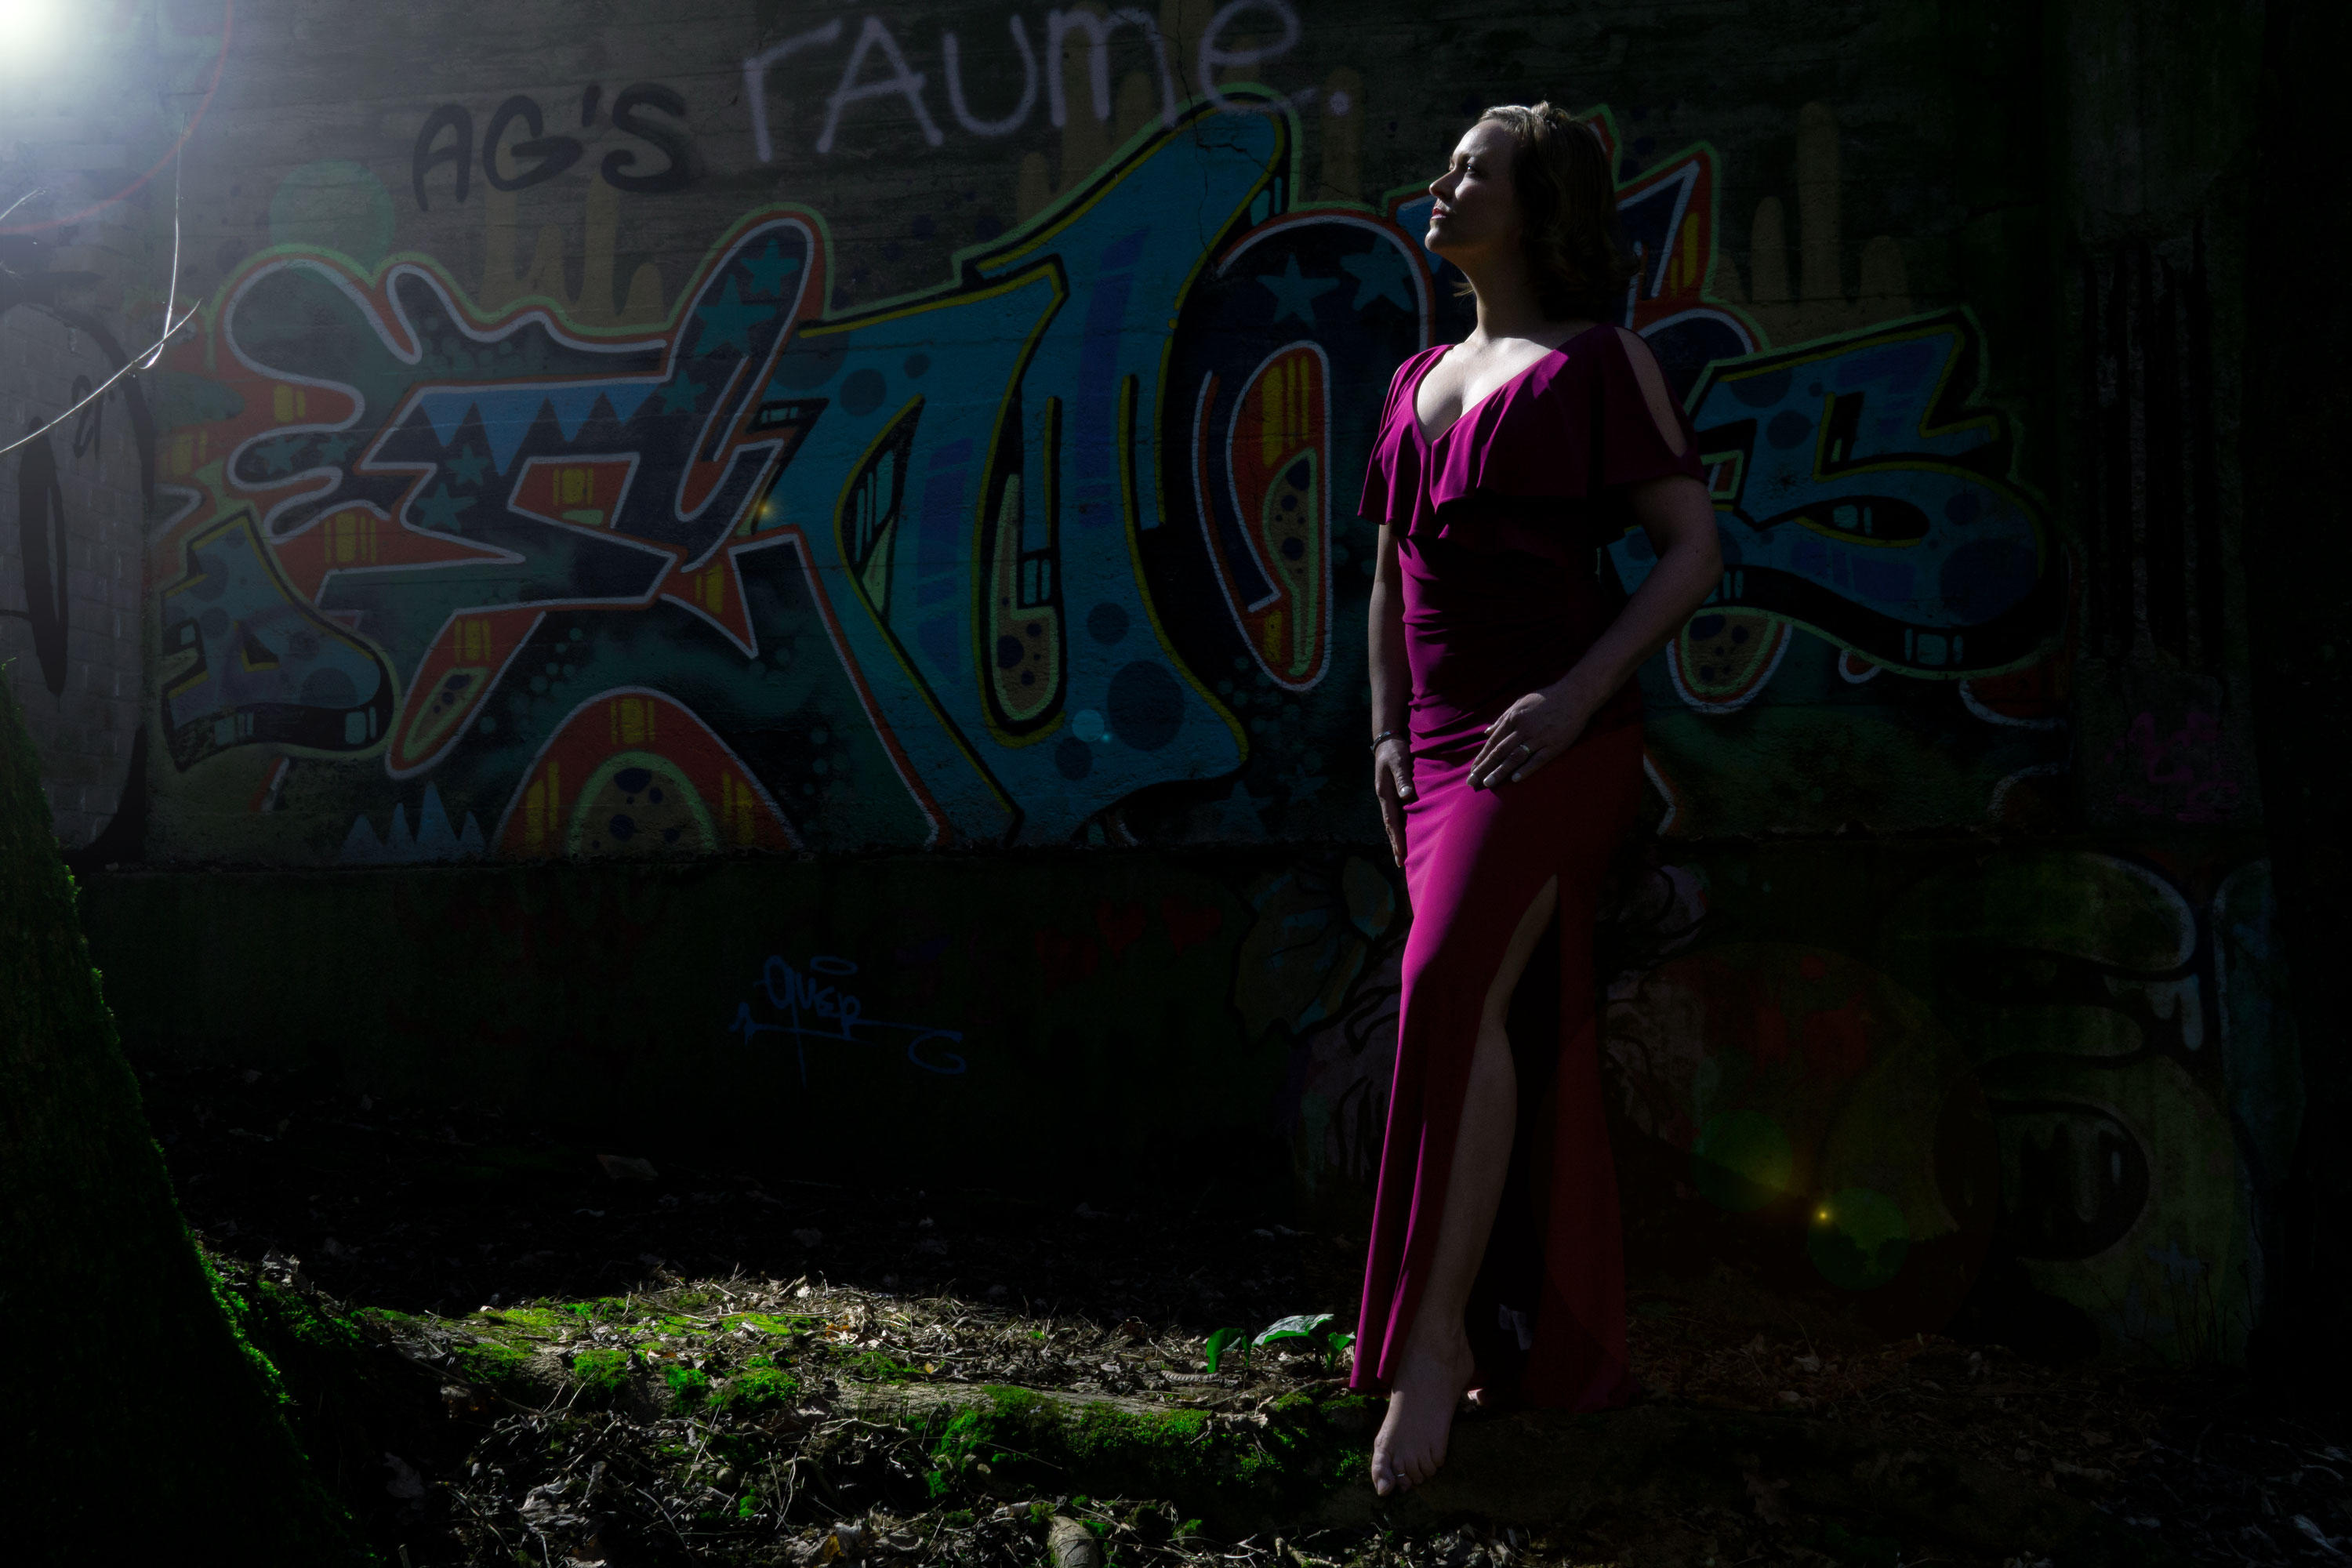 Sängerin Melanie Casni
Shining in the darkness
Fotoshoot: cocubu